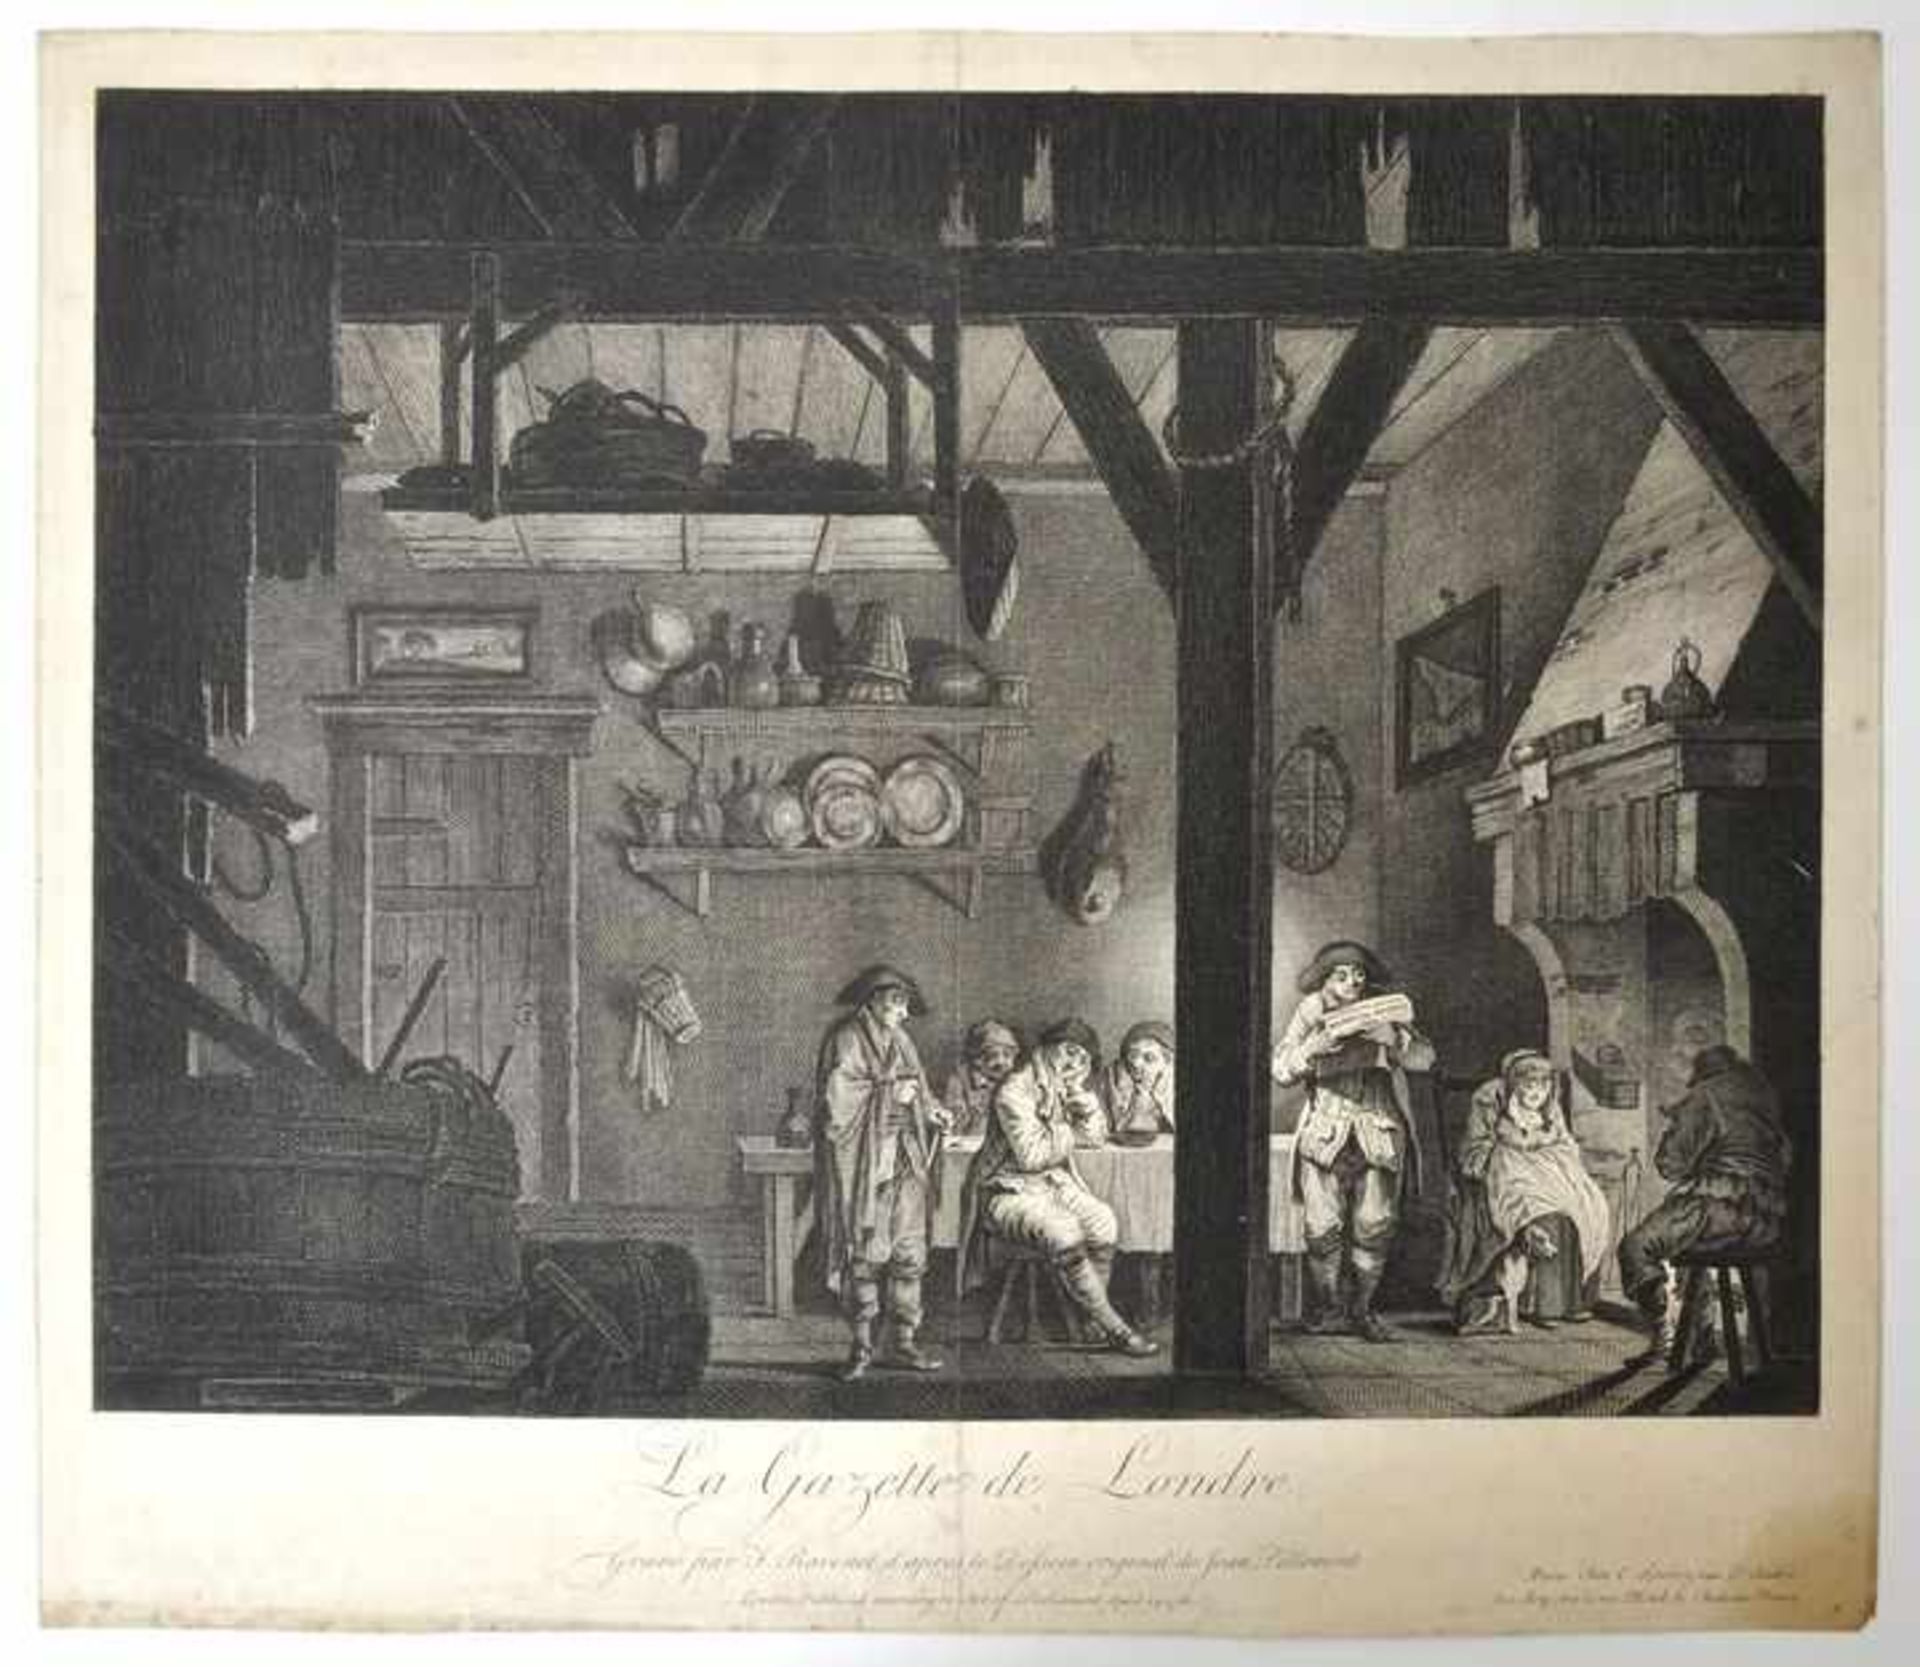 Jean-Baptiste Pillement (1728-1808). "La Gazette de Londre". Kupferstich von F. Ravenet nach dem